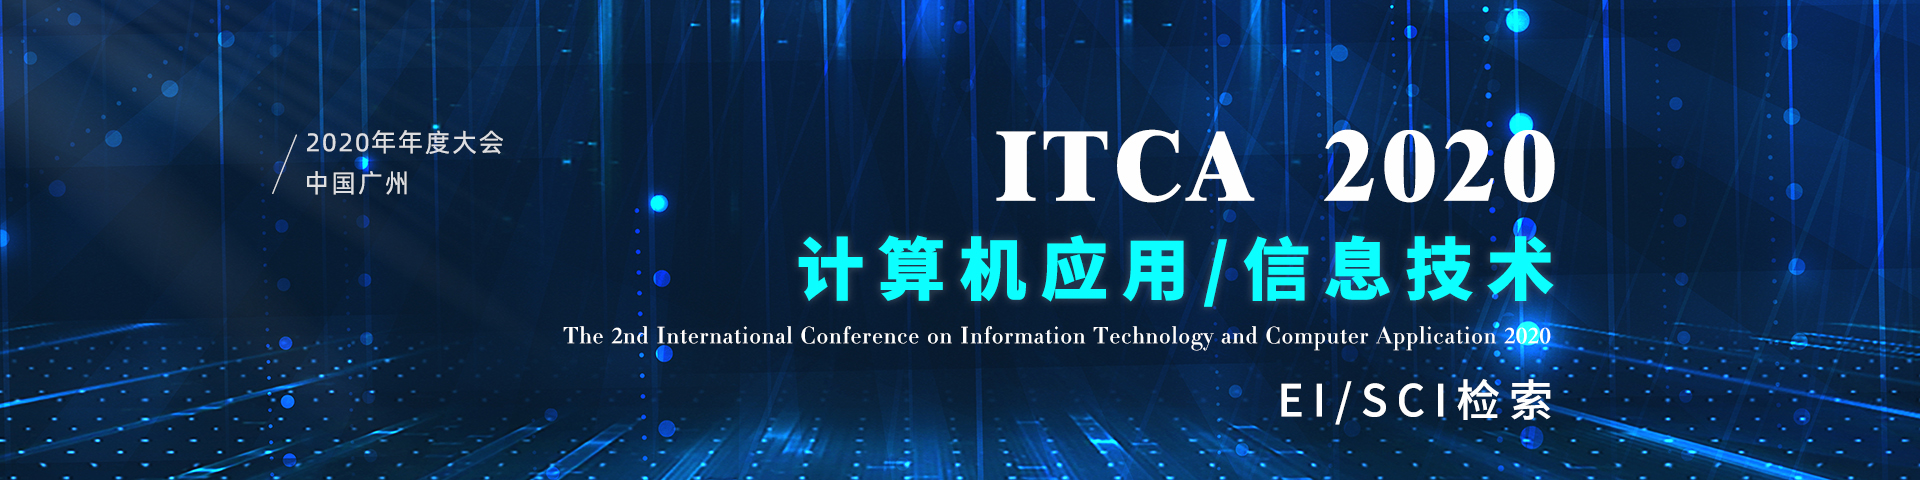 ITCA2020艾思平台-丘嘉明0622.jpg